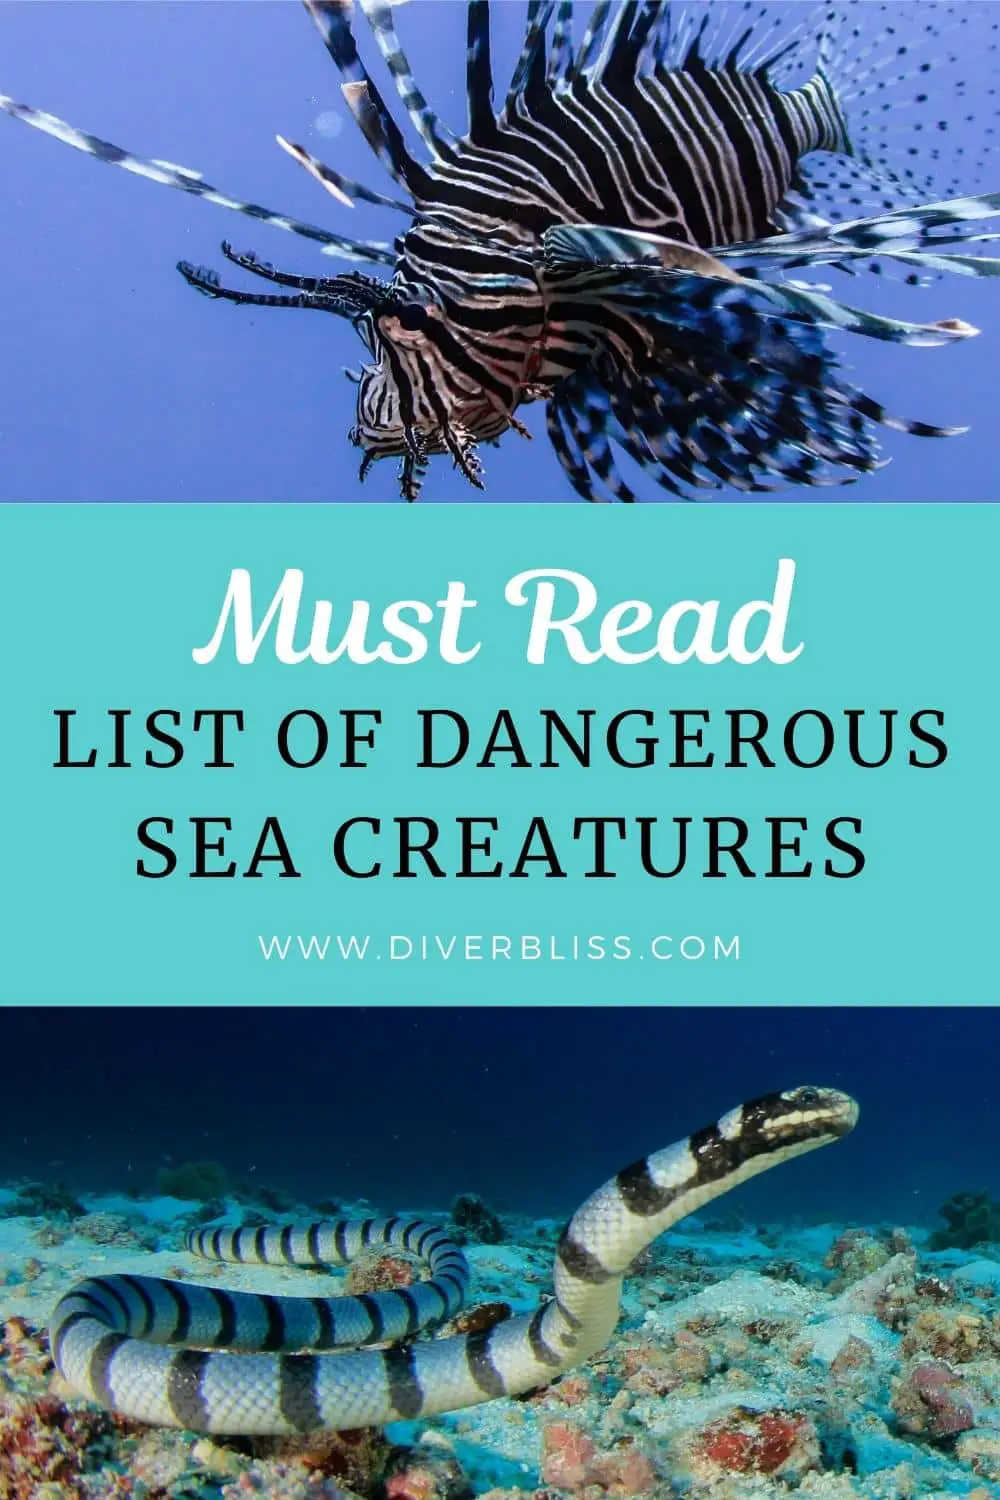 Must read list of dangerous sea creatures